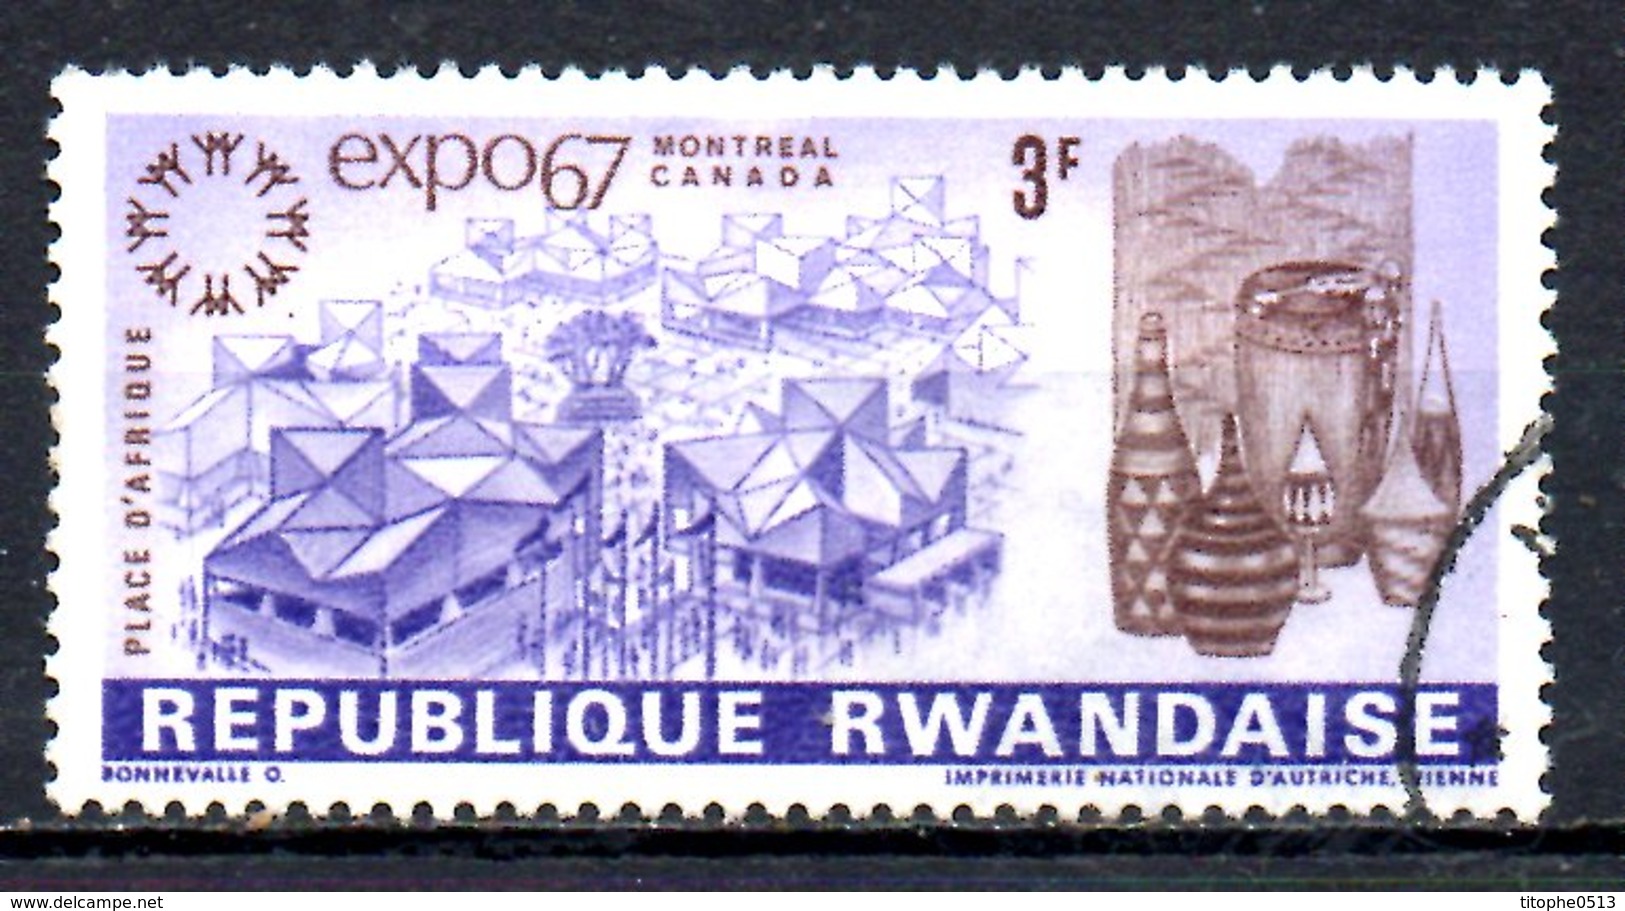 RWANDA. N°223 Oblitéré De 1967. Expo'67. - 1967 – Montreal (Canada)